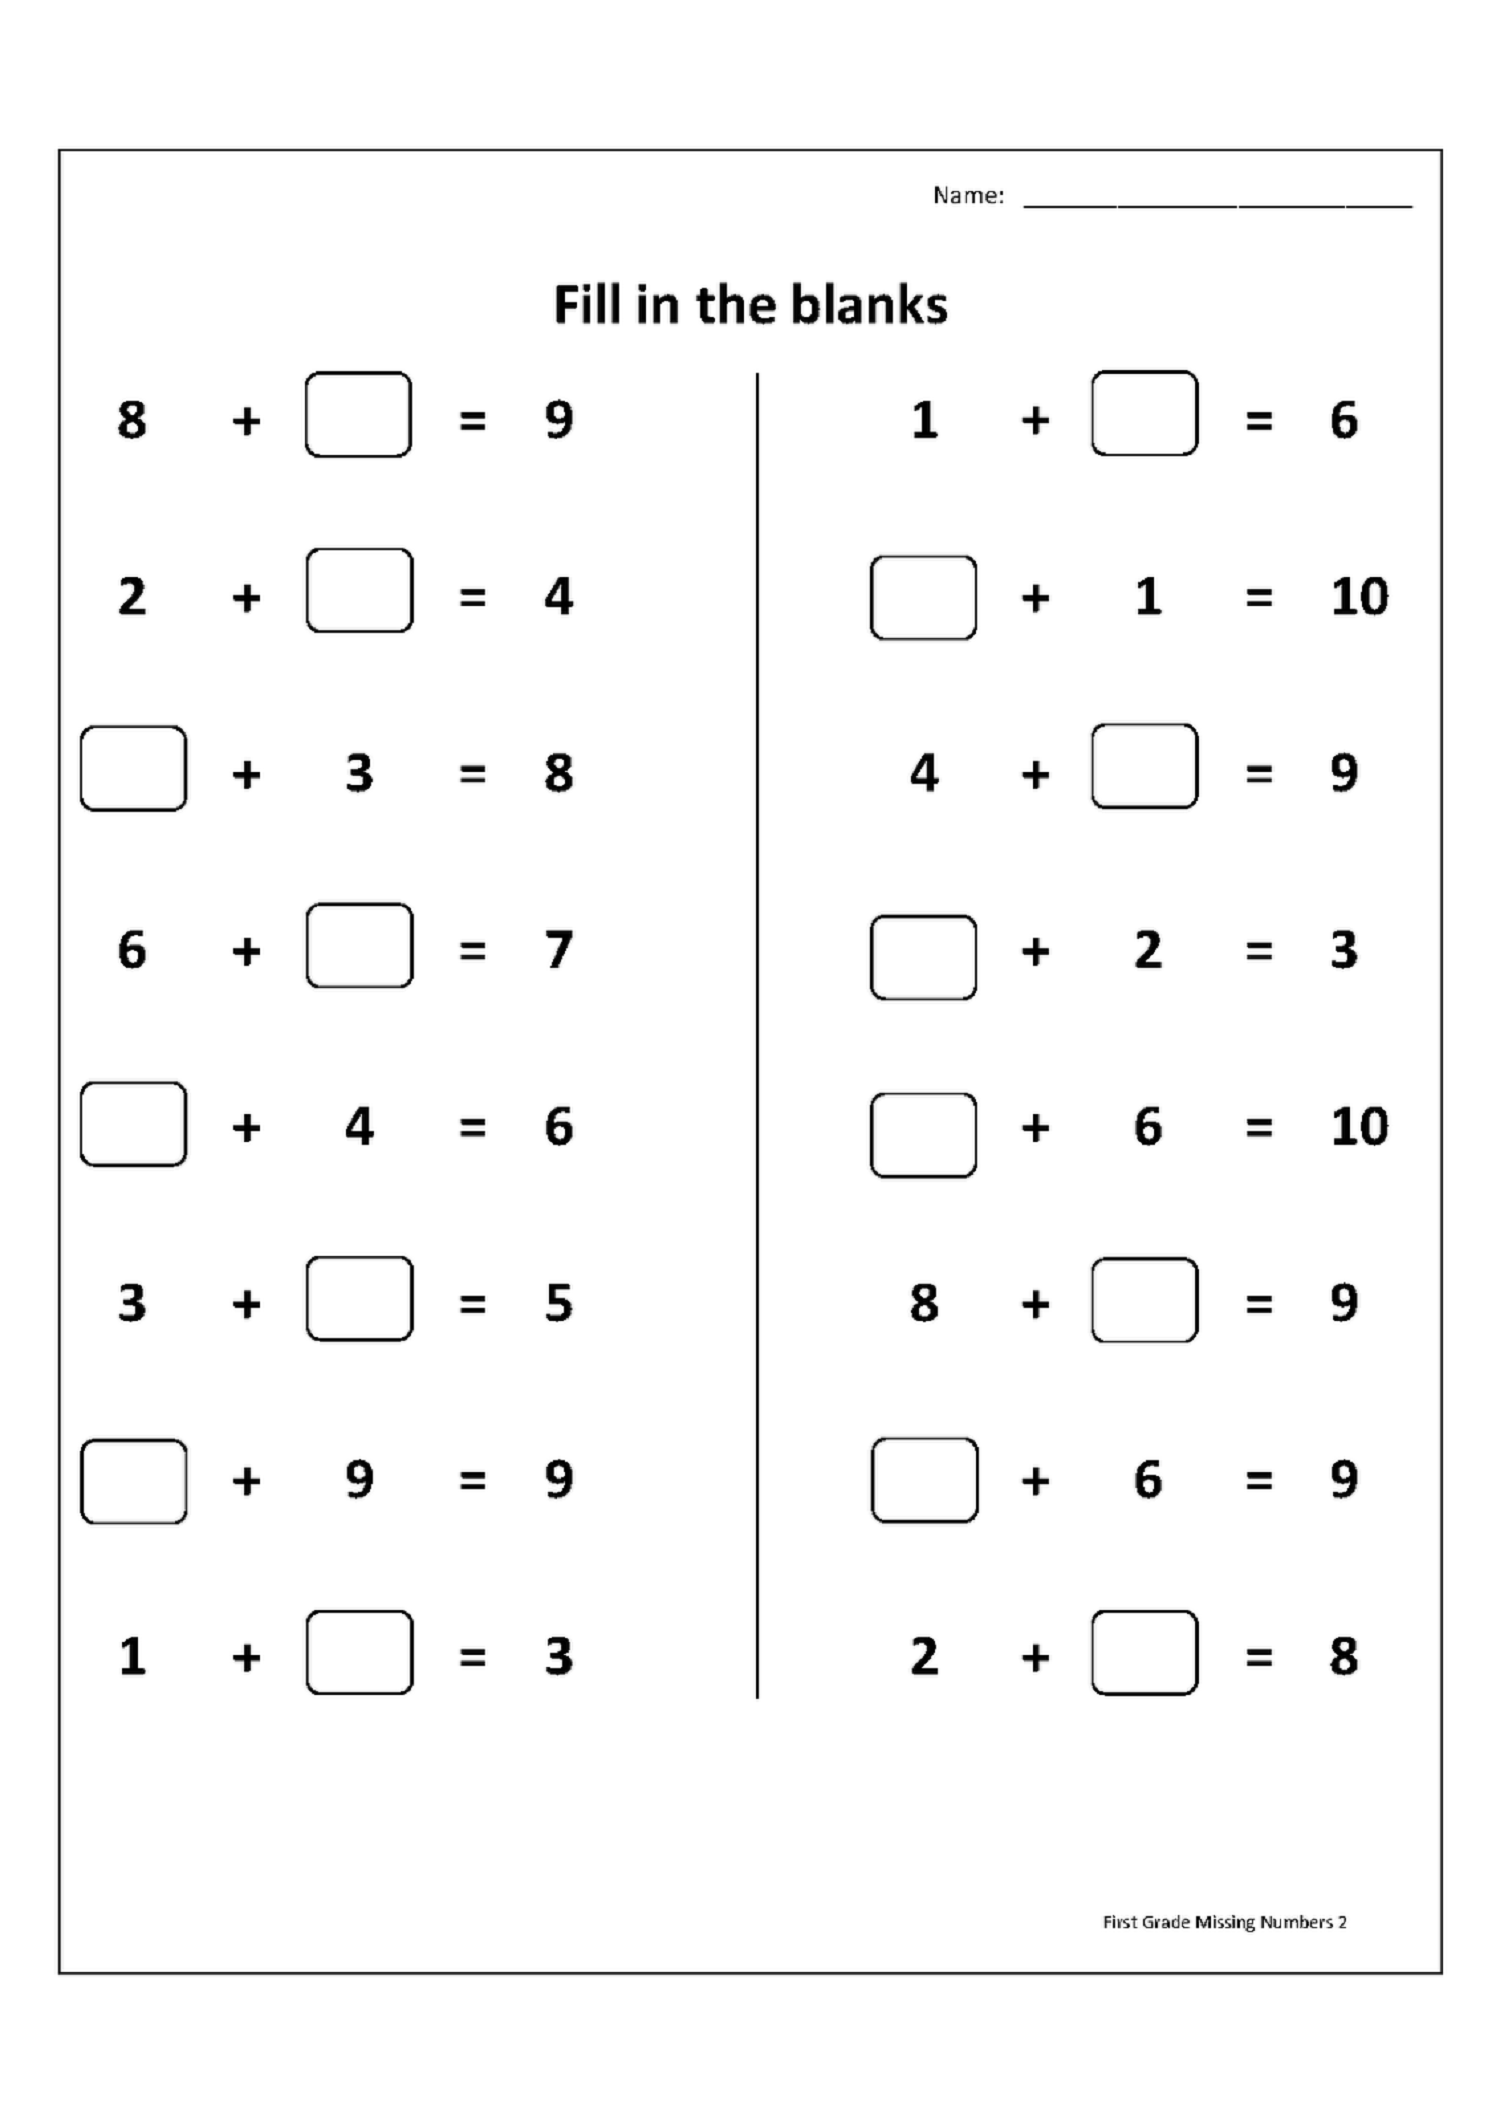 maths worksheets for grade 1 download math worksheets for grade 1 for children task printable grade download worksheets for maths 1 